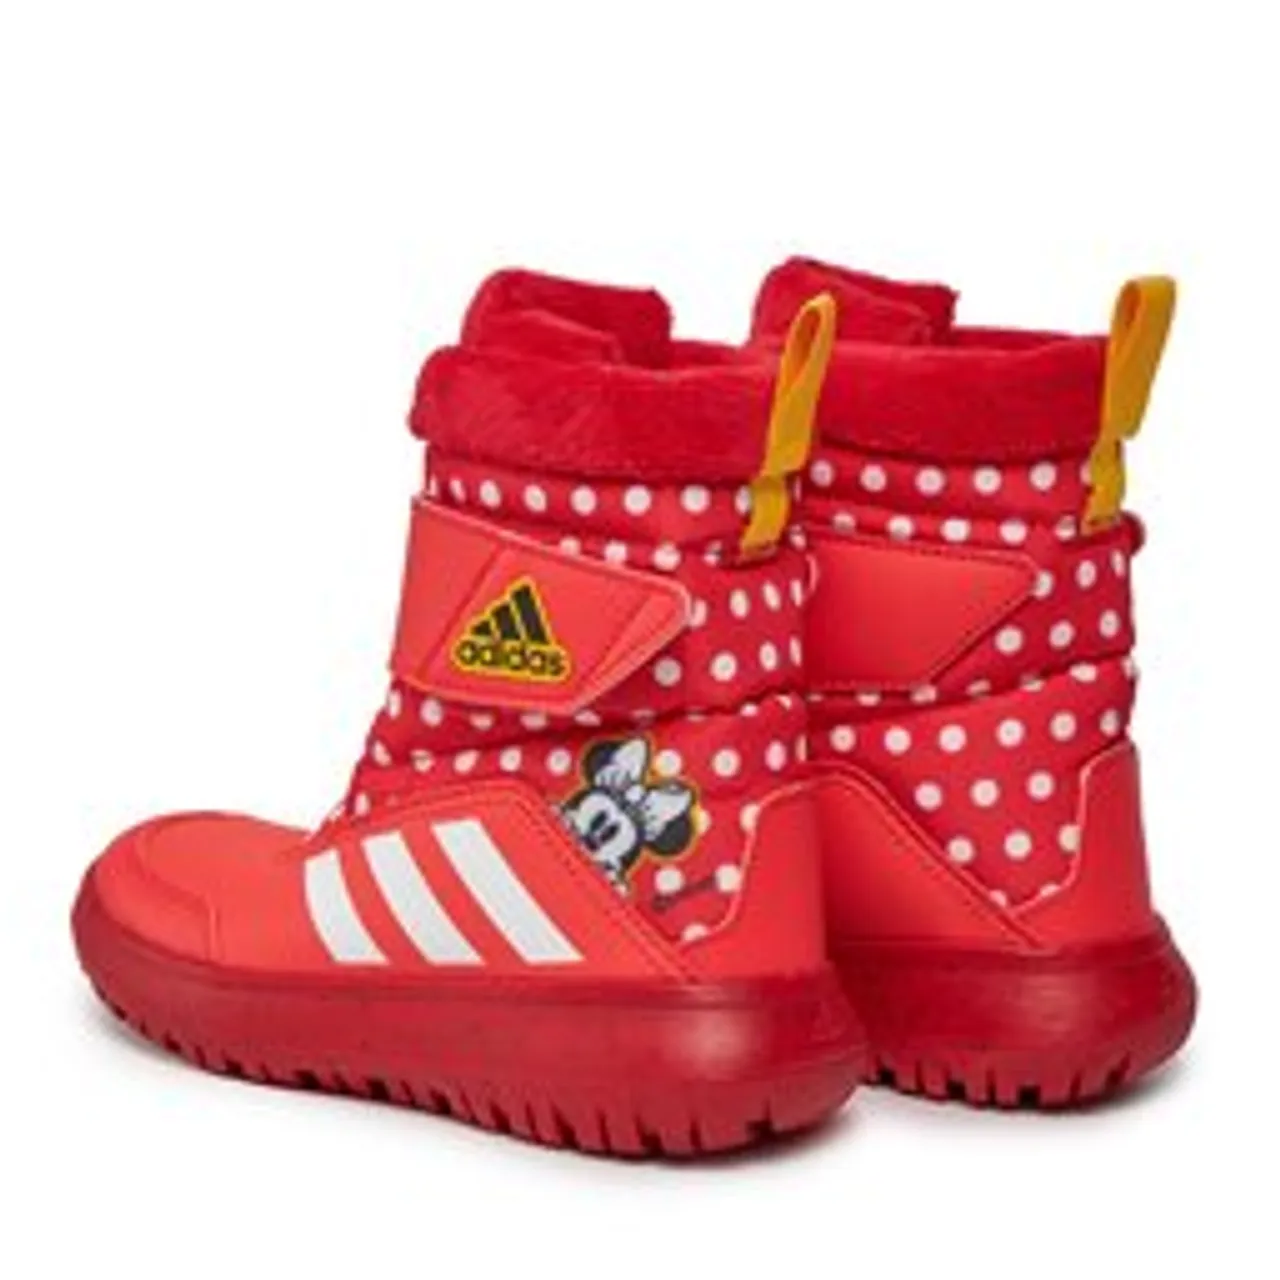 Schuhe adidas Winterplay x Disney Shoes Kids IG7188 Brired/Ftwwht/Betsca